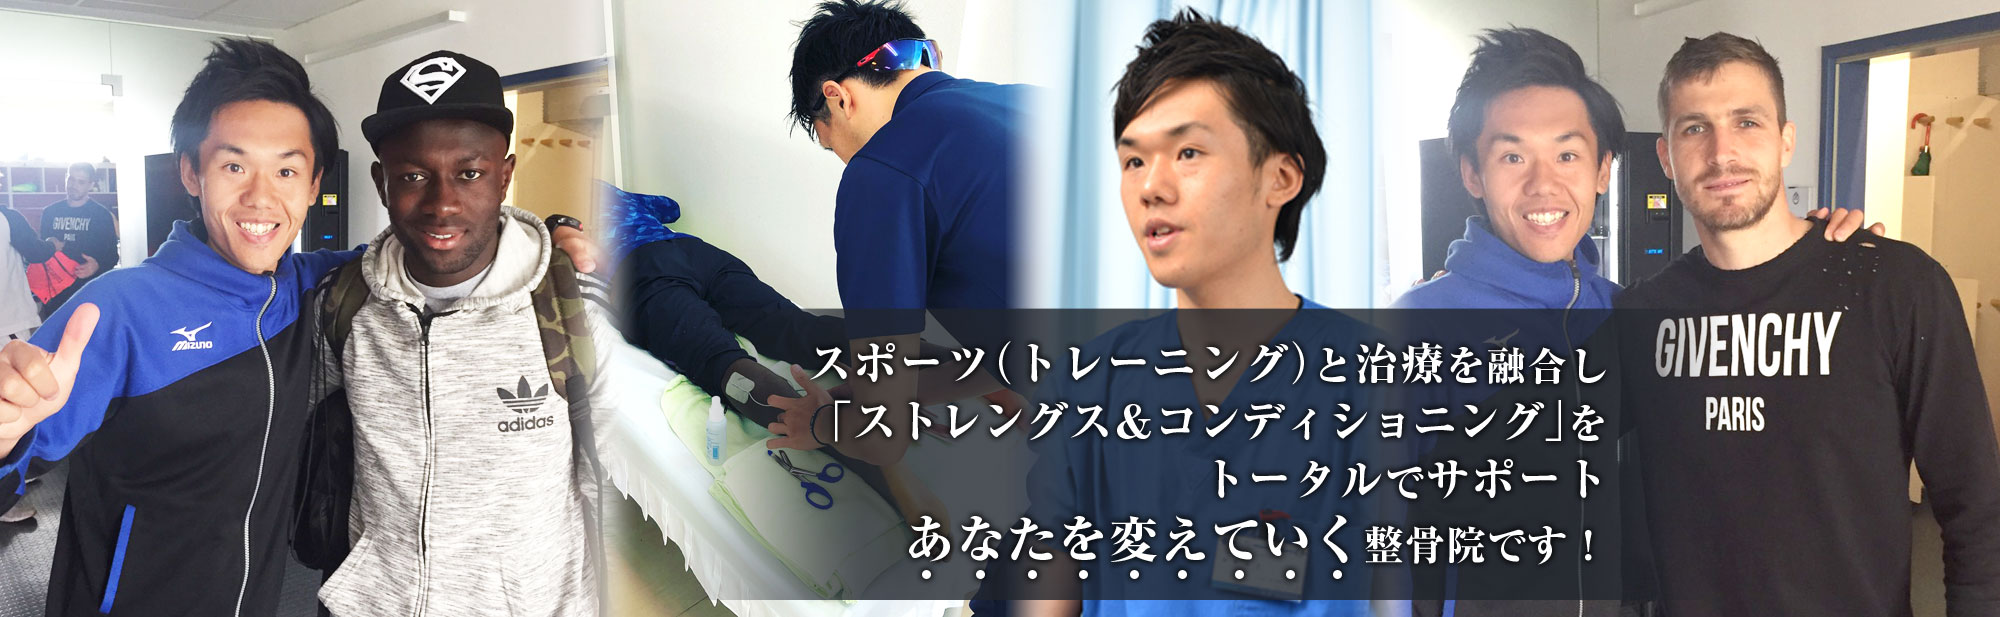 Nakajima整骨院|横浜で野球,サッカーによる肩,肘,腰,膝,足のインディバ施術で評判